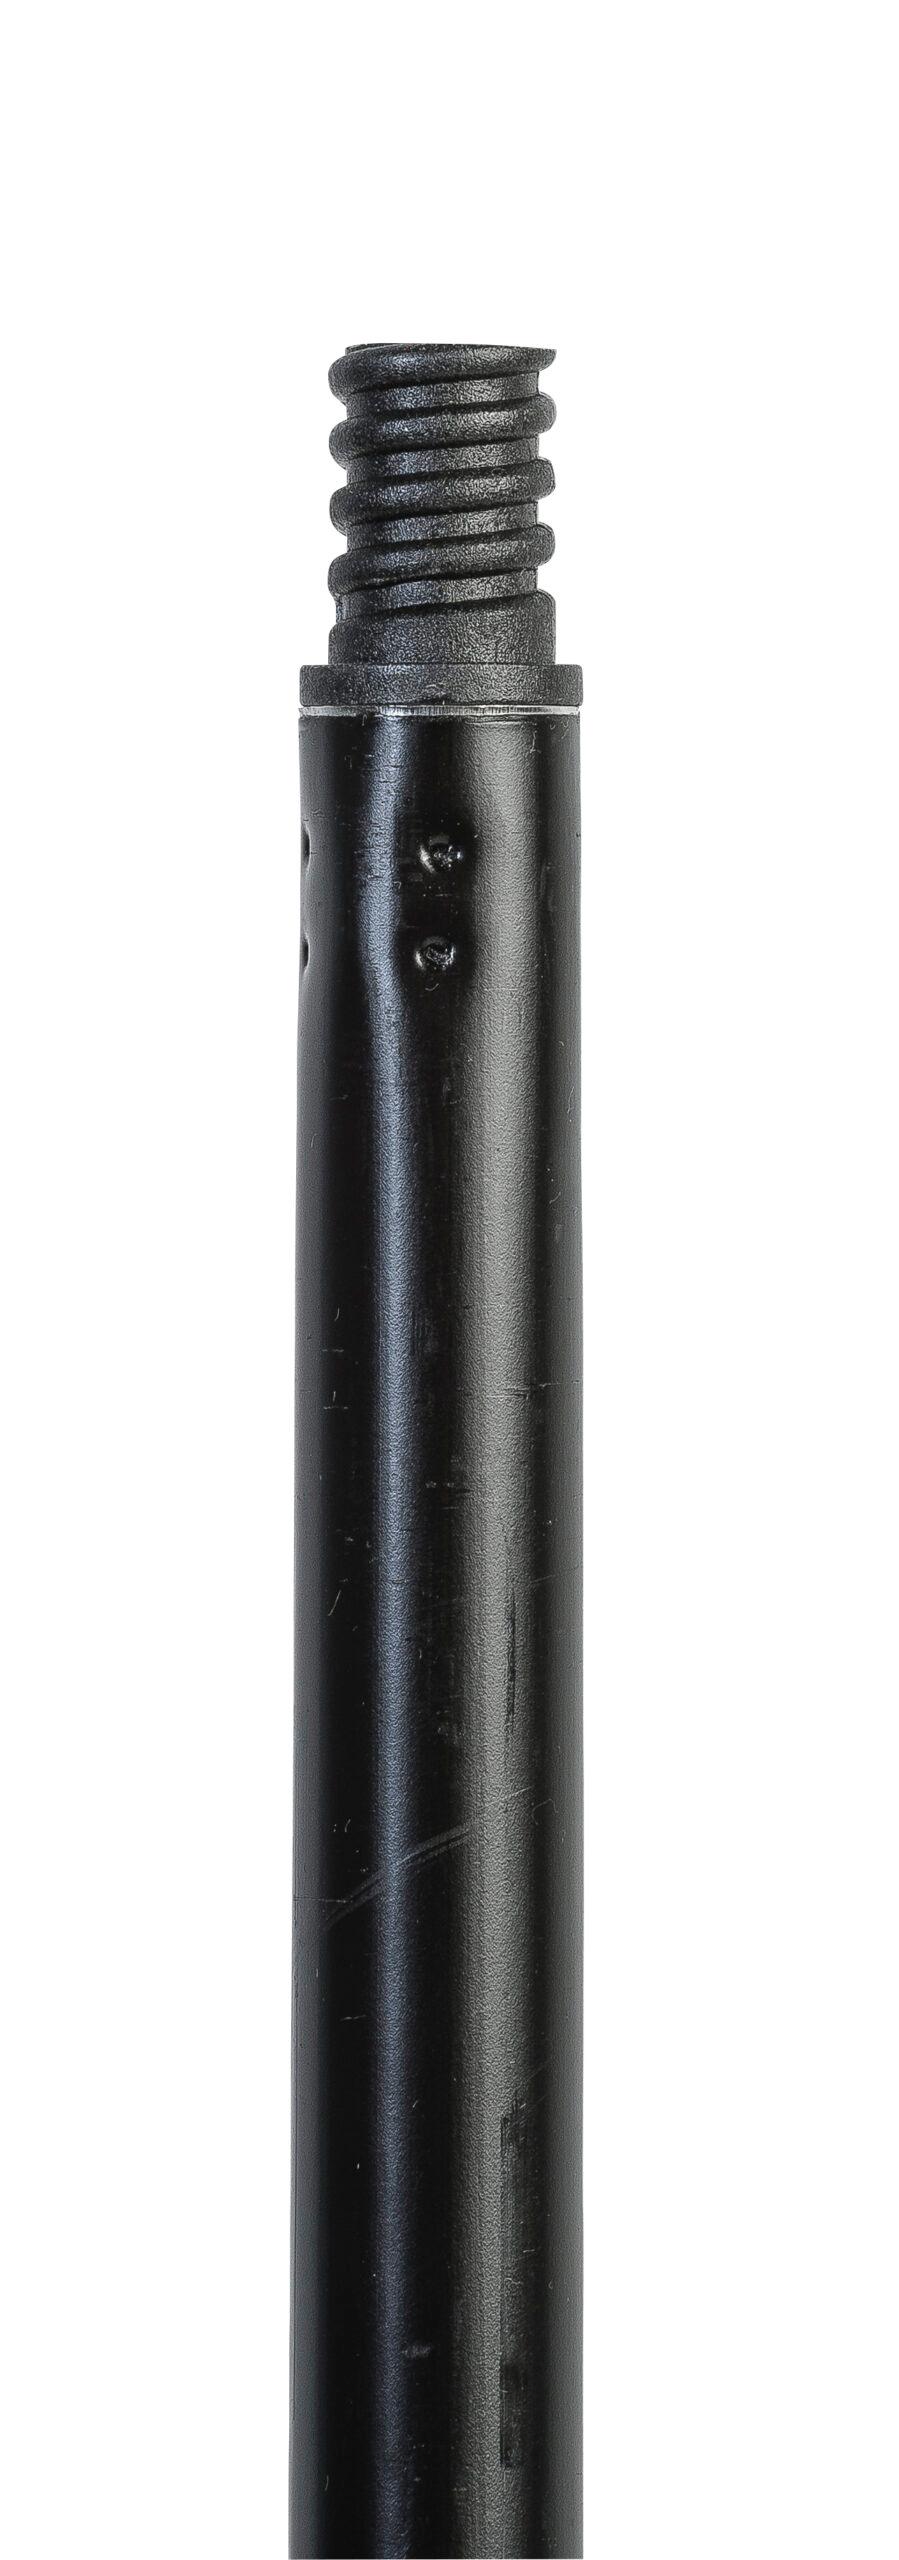 FH-M2360-HDBK - 60" x 1" Threaded Metal Handle - Black